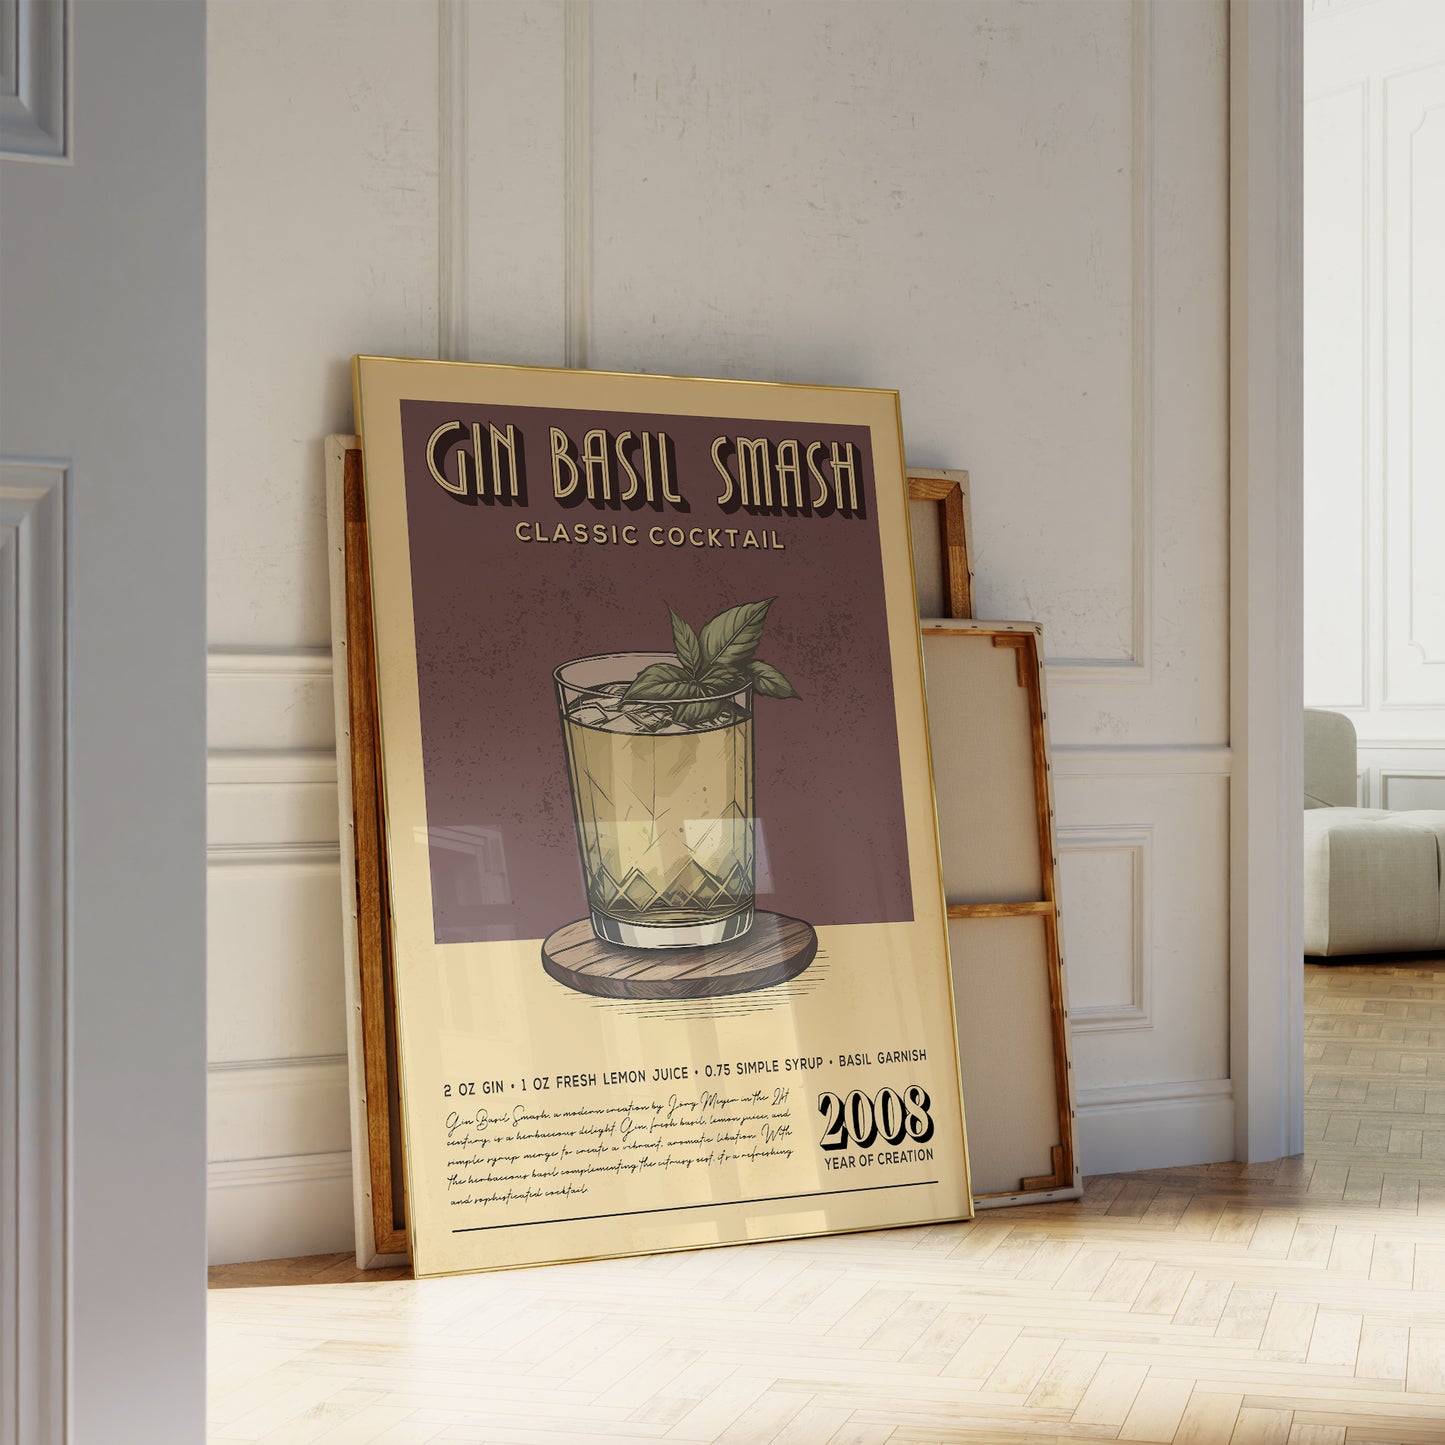 Gin Basil Smash - Classic Cocktail Poster